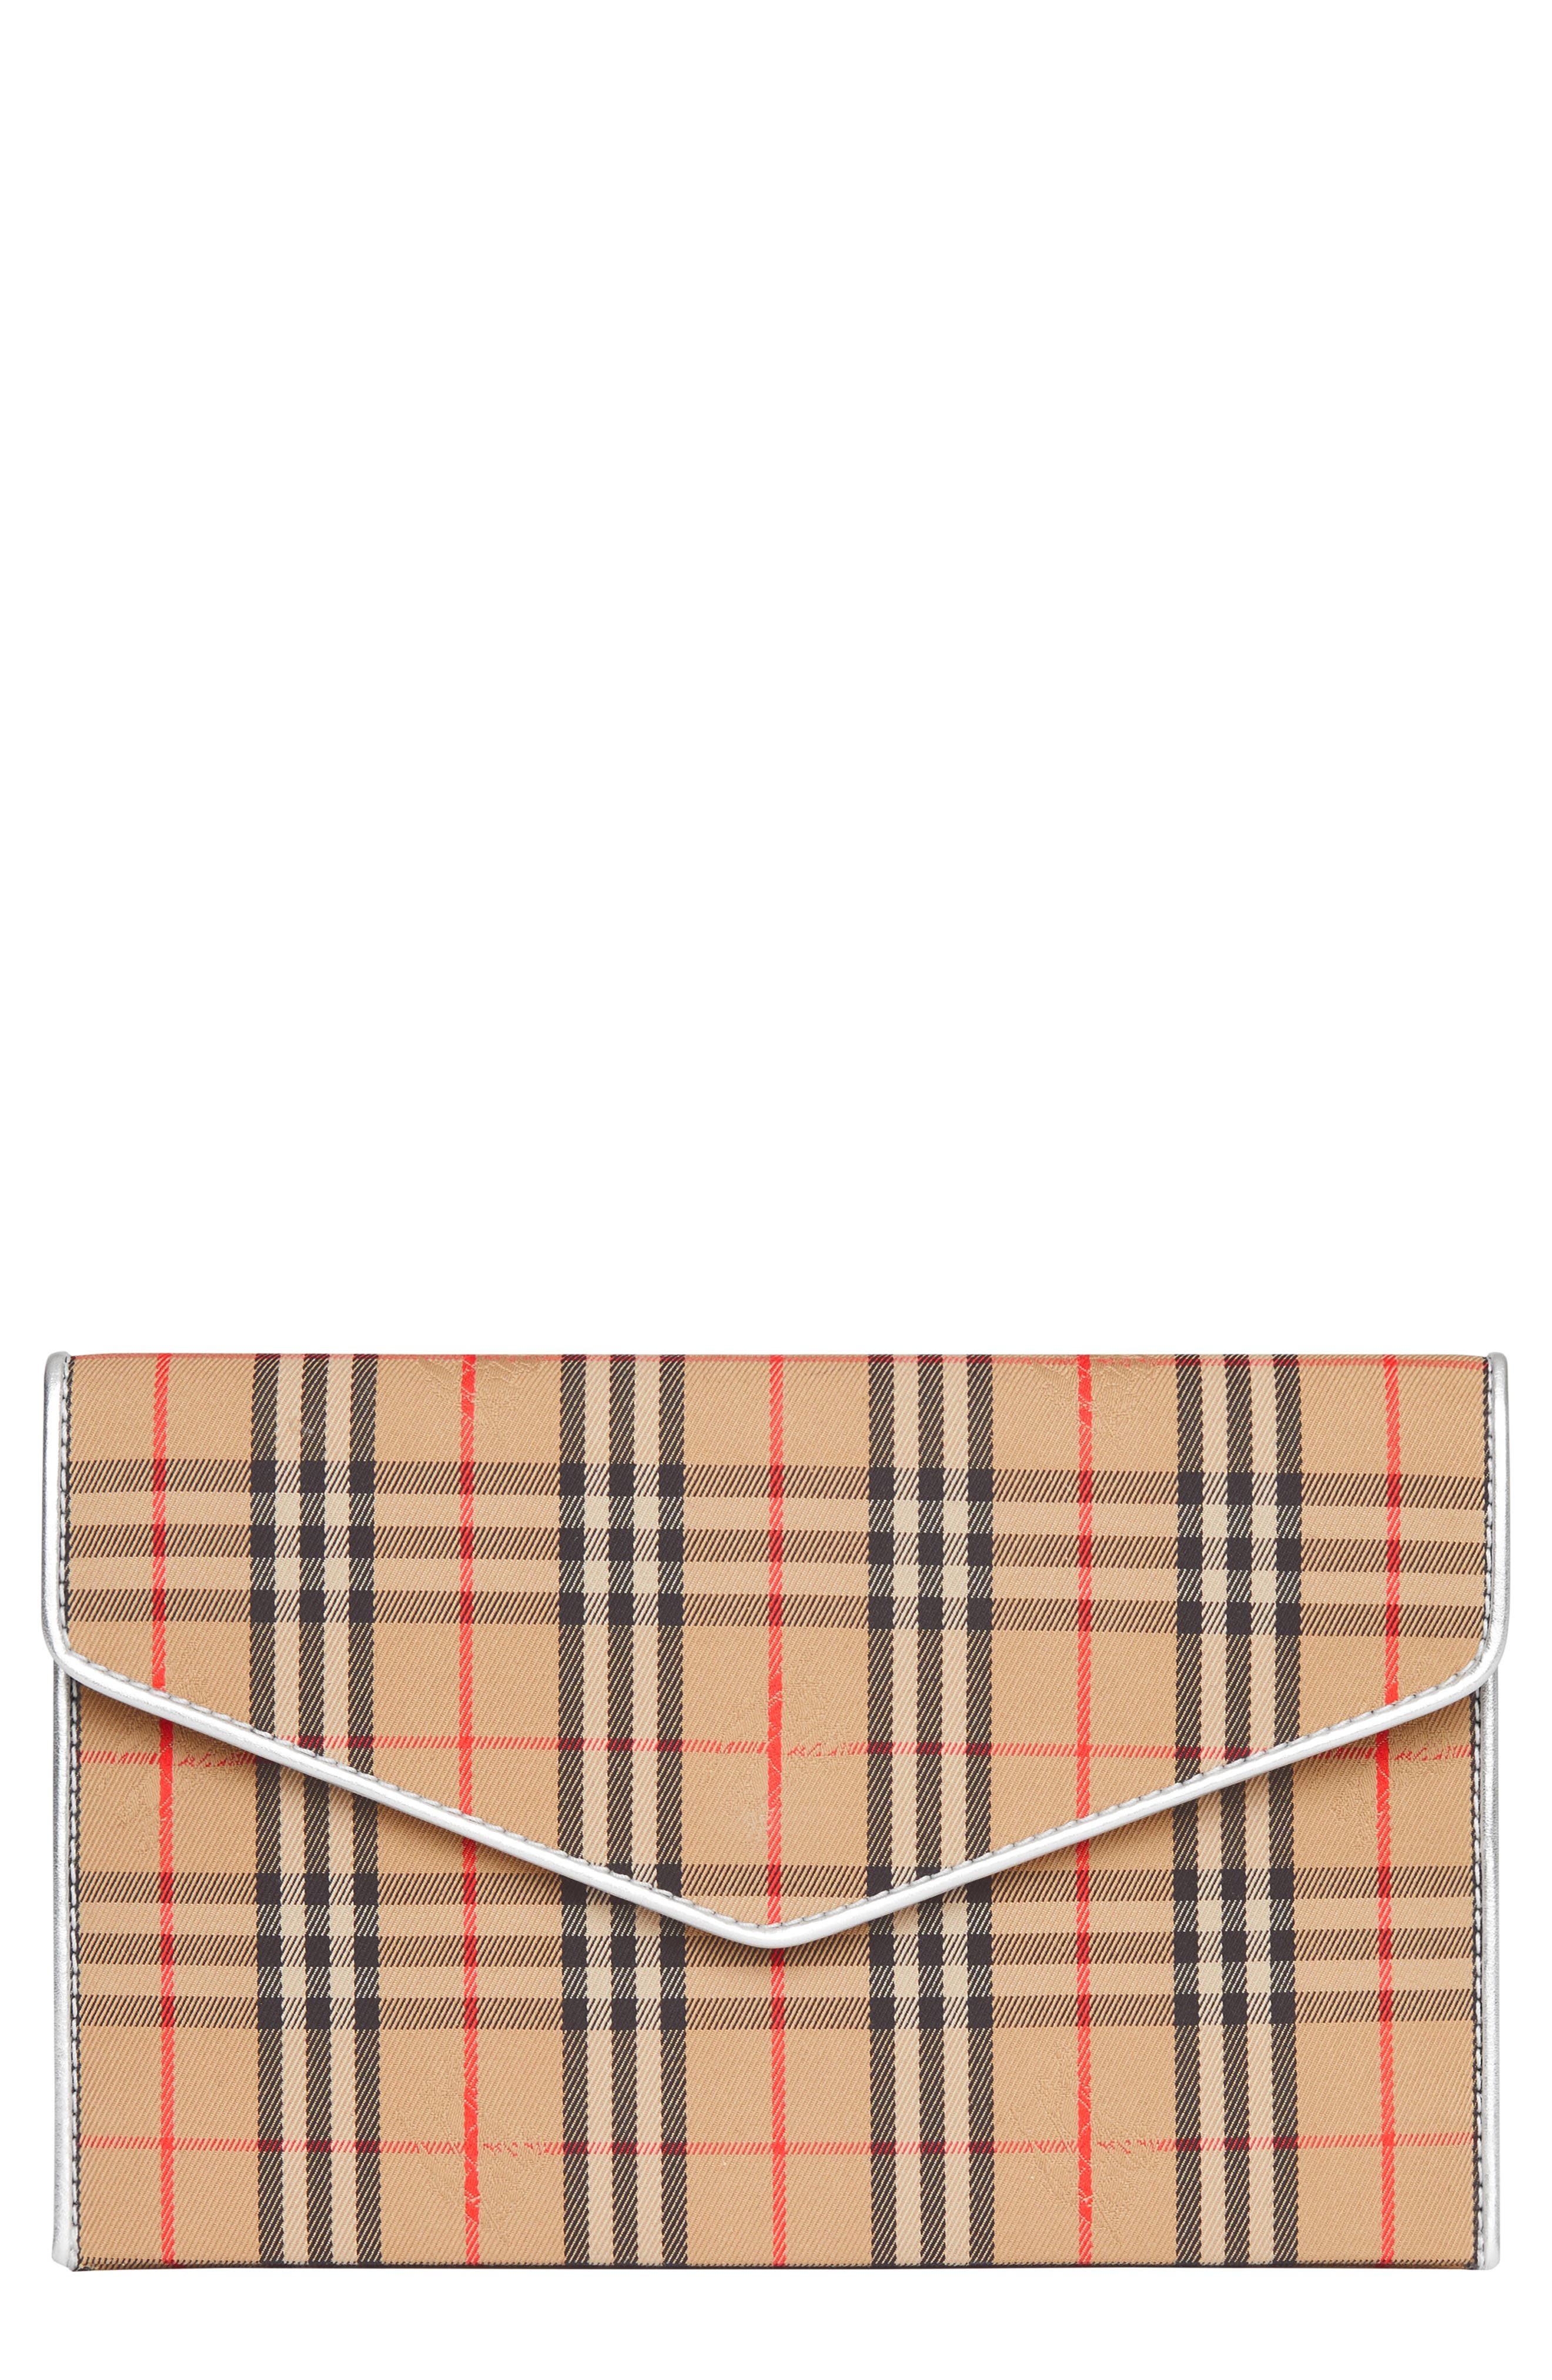 burberry envelope clutch